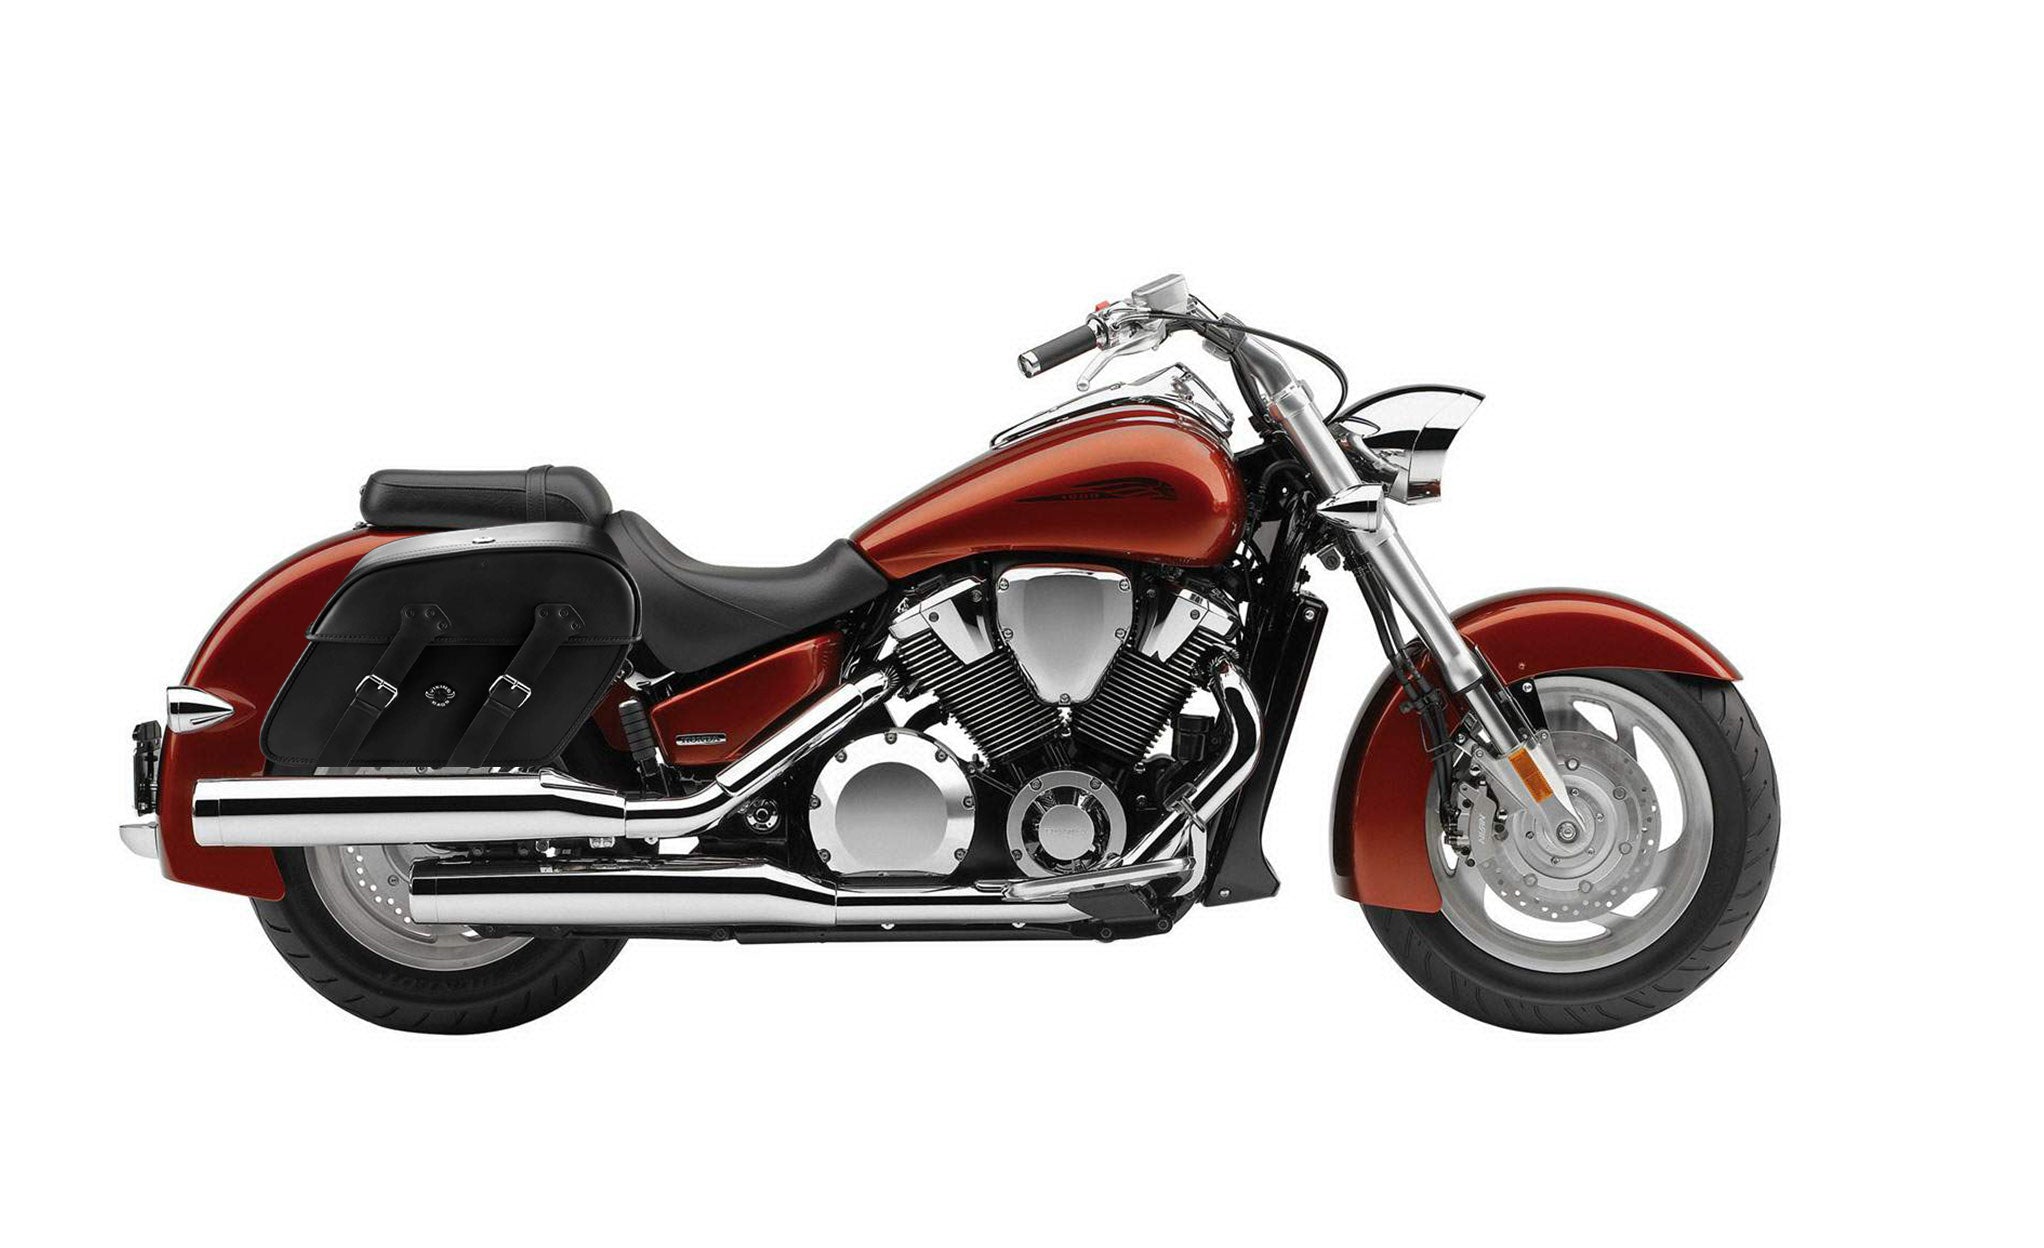 Viking Raven Extra Large Honda Vtx 1800 N Shock Cut Out Leather Motorcycle Saddlebags on Bike Photo @expand